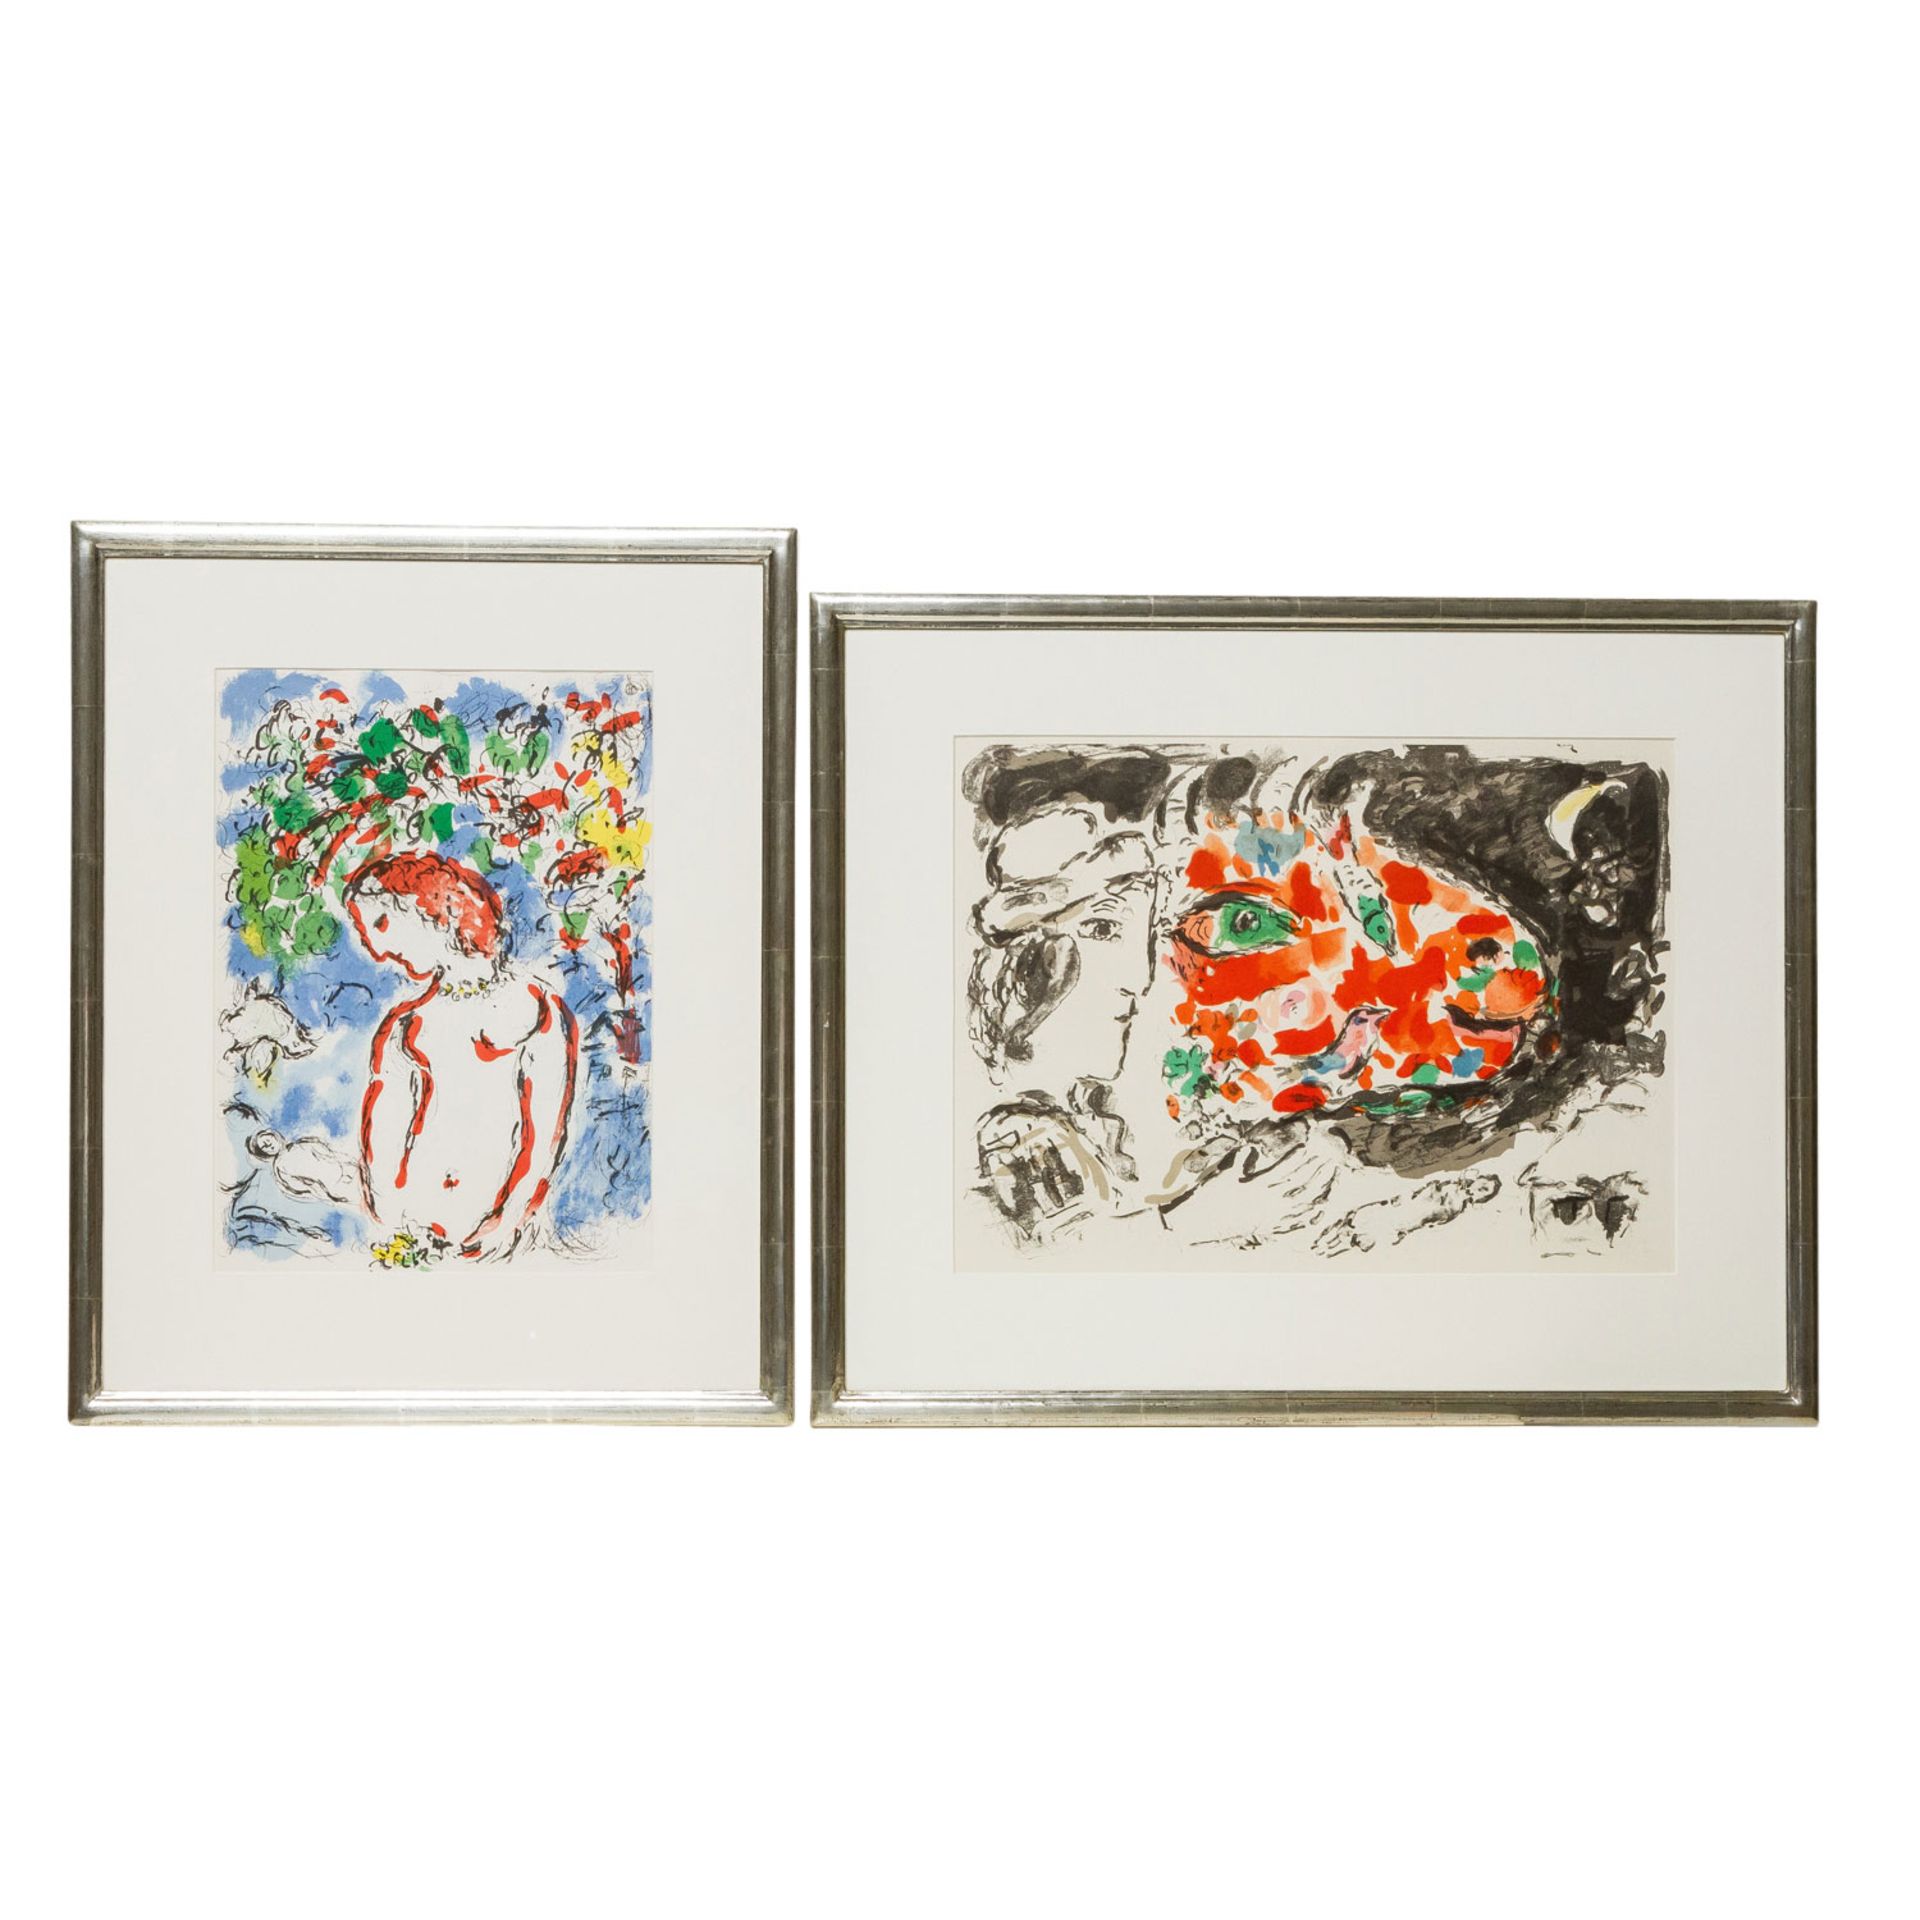 CHAGALL, MARC (1887-1985), "Derriere le Miroir" 1972 und 2 Lithographien,